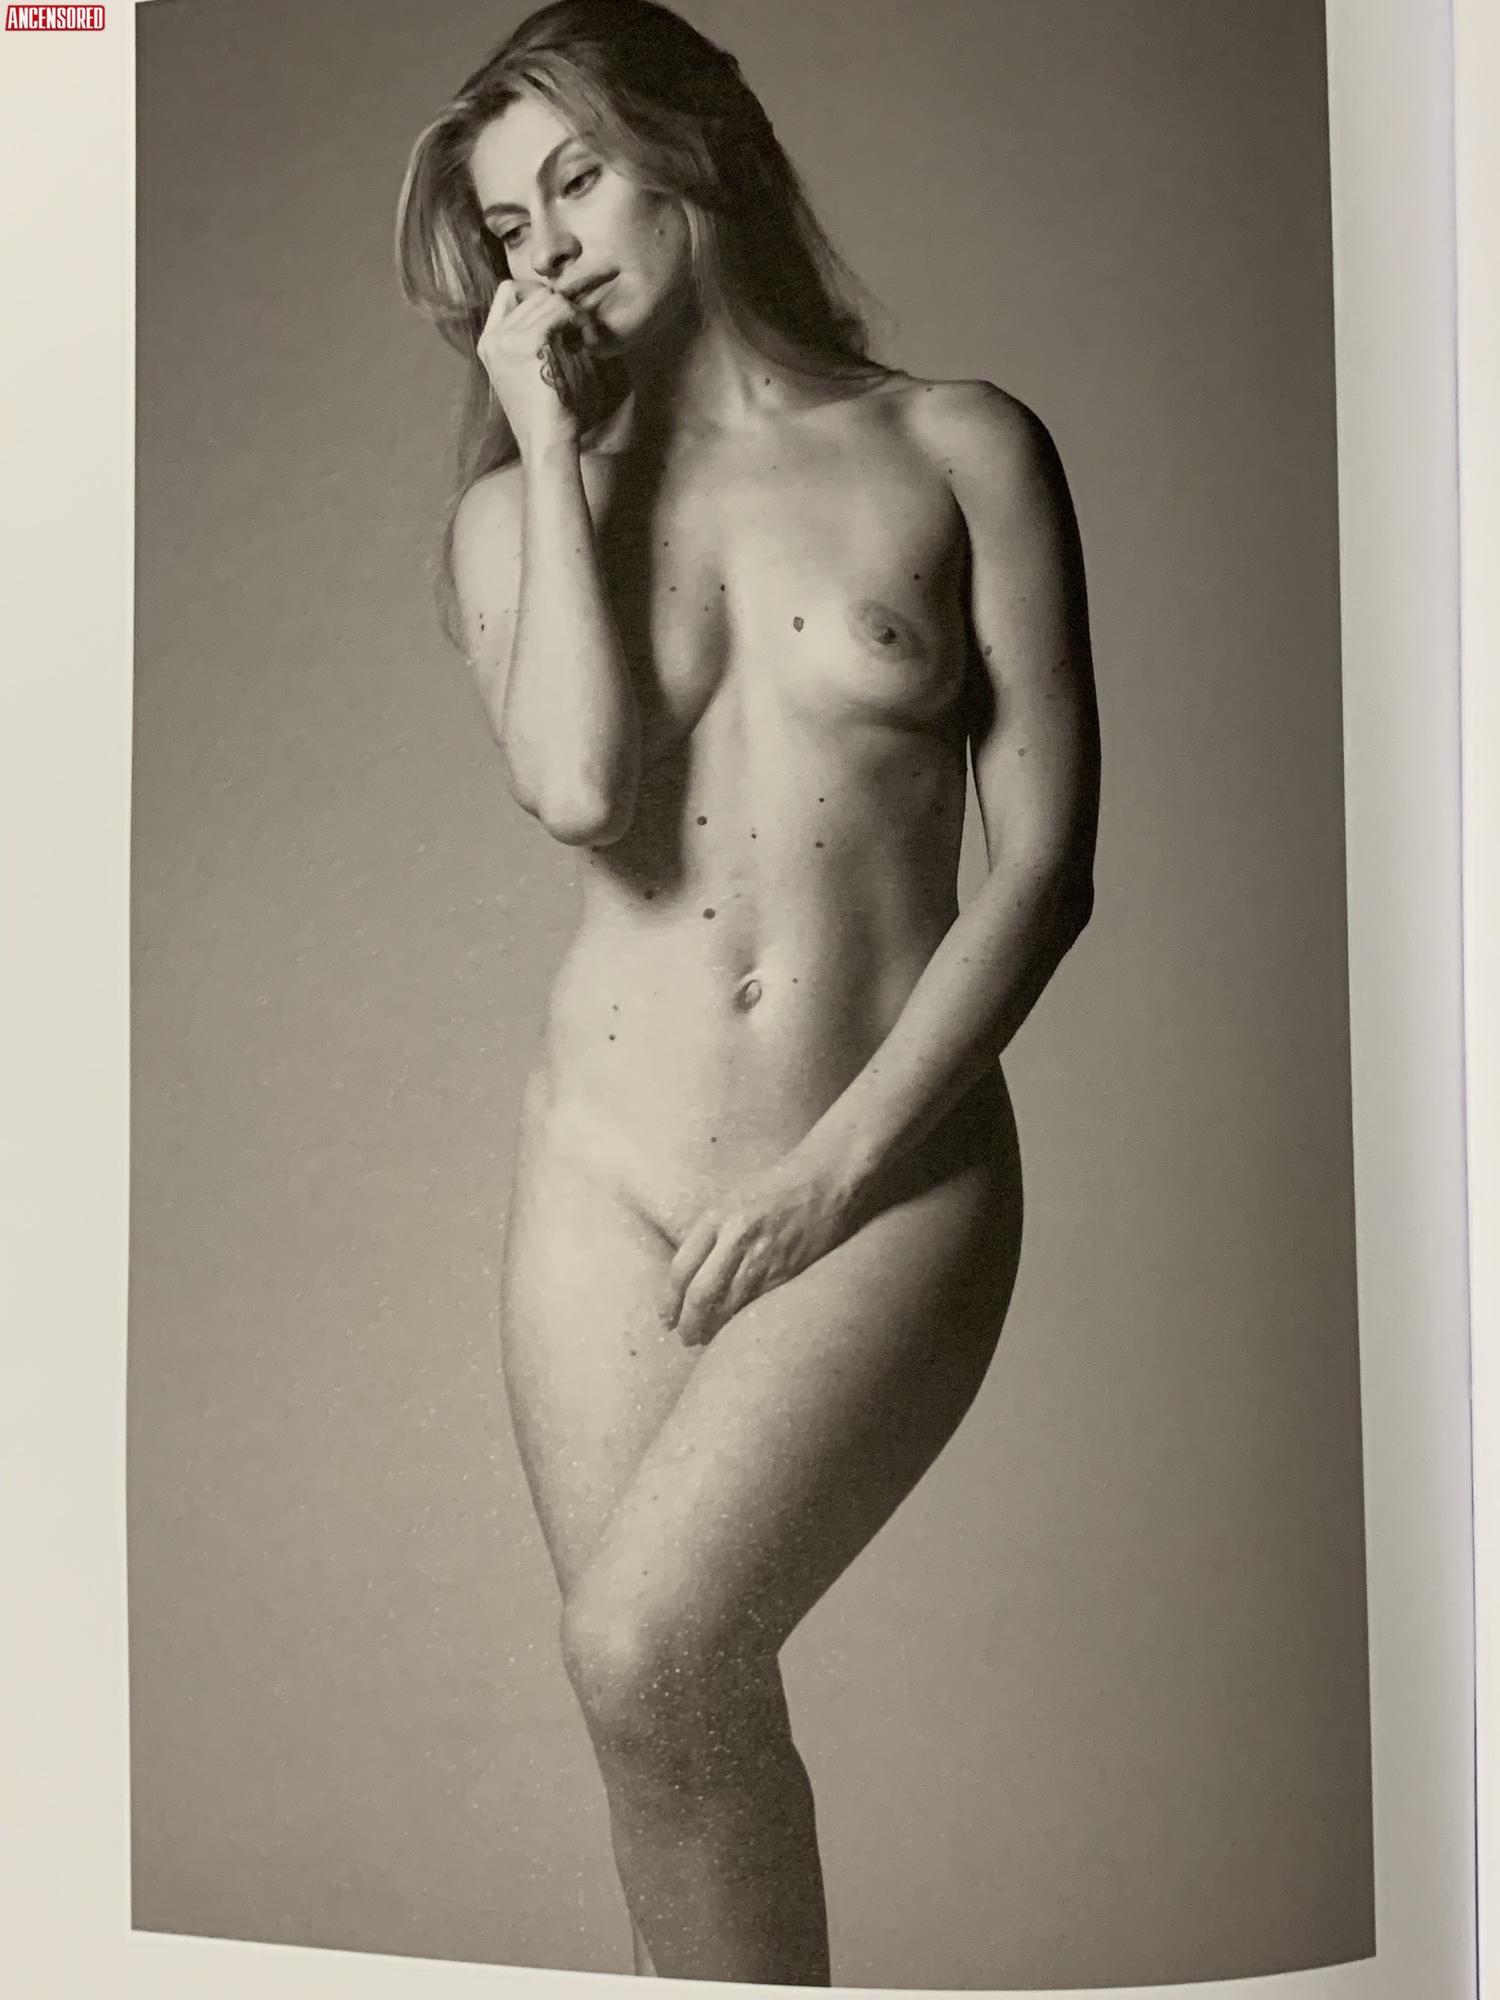 Lana Rhodes Nuda ~30 Anni In Pele Project